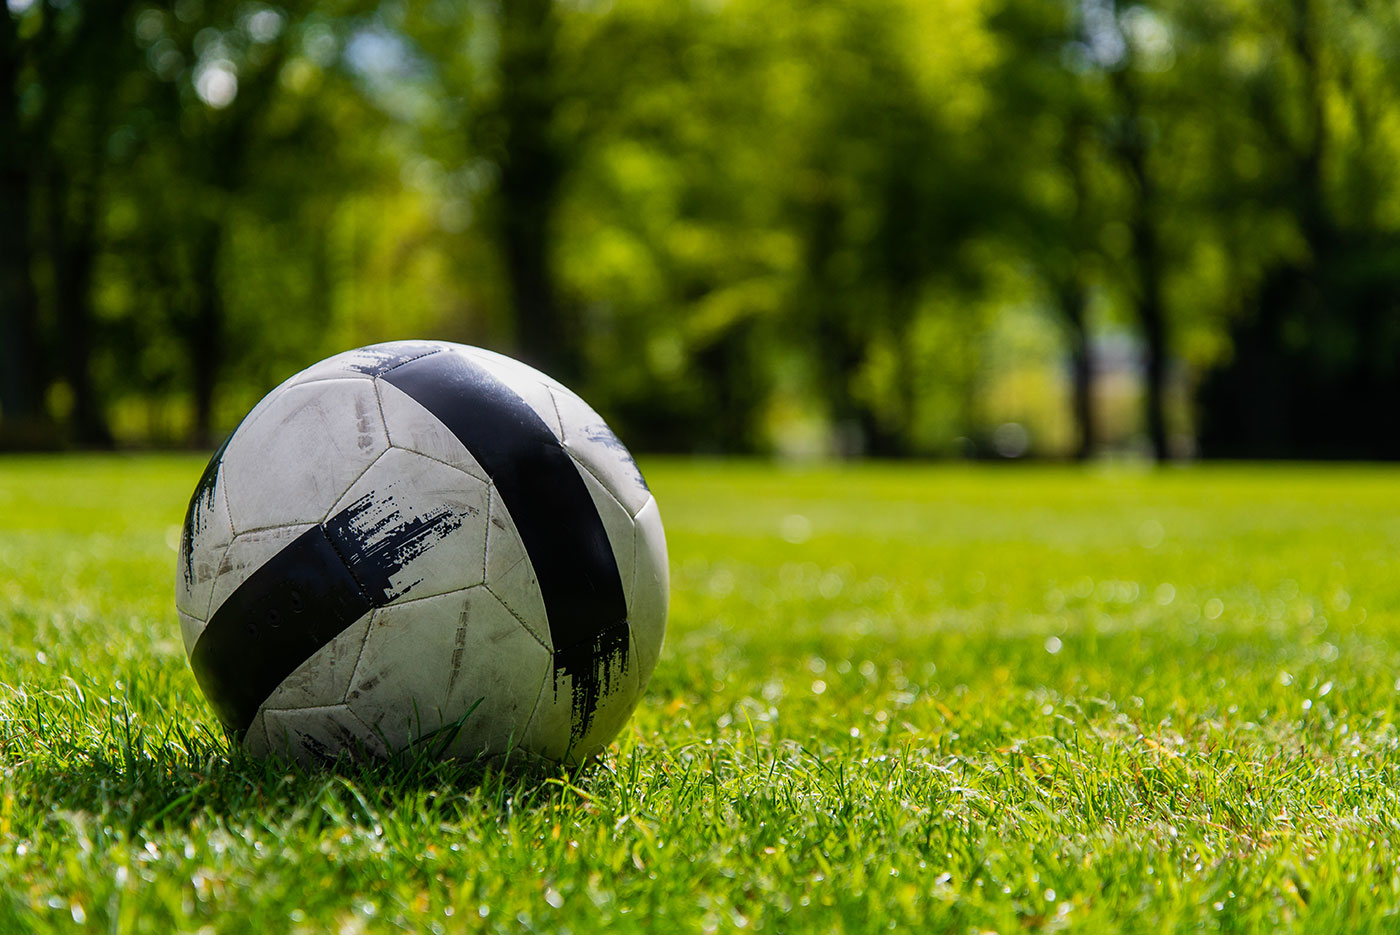 Soccer ball on green grass playground